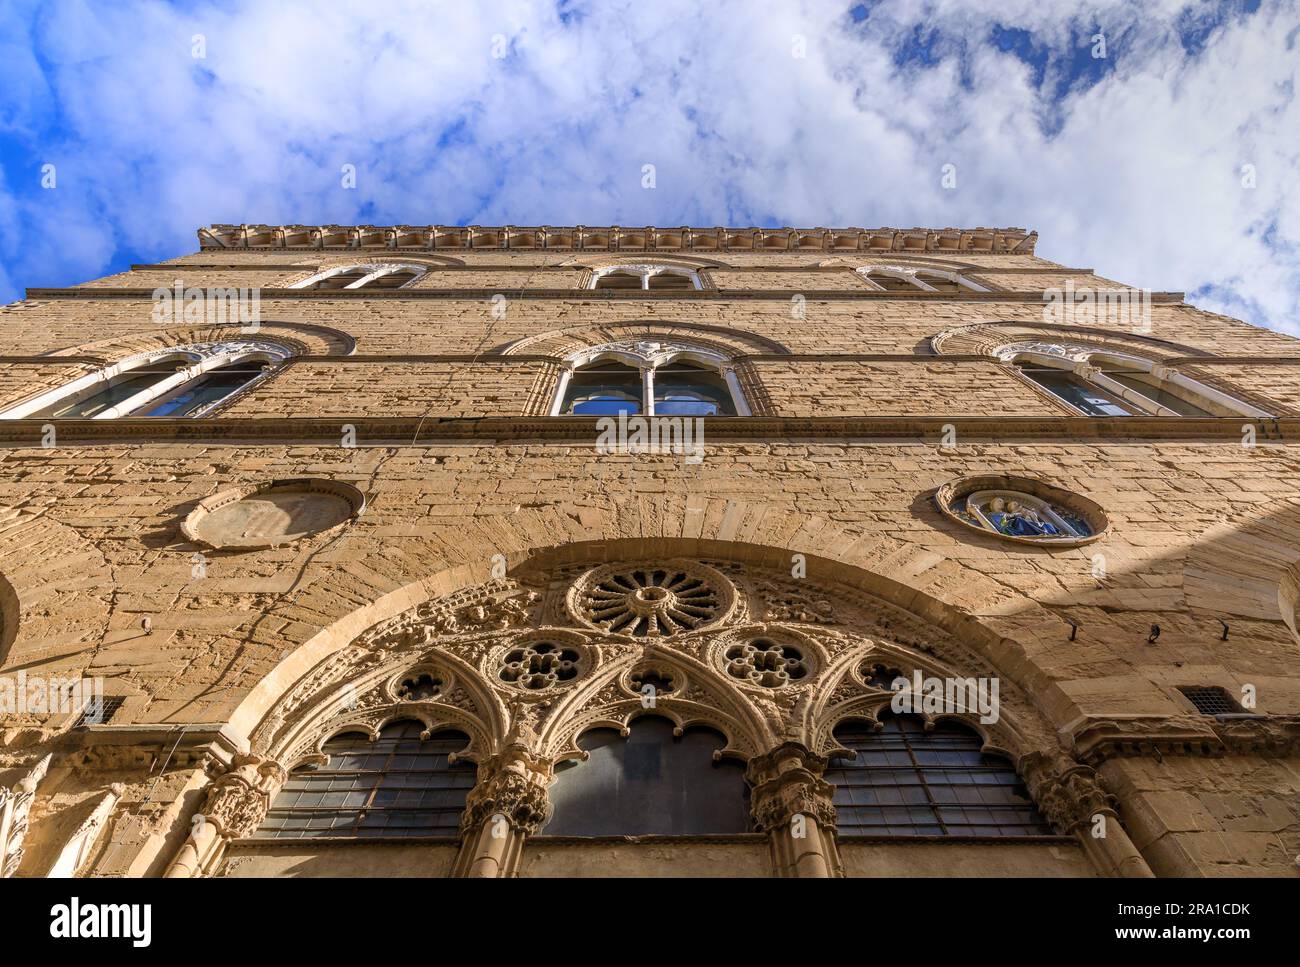 Die Kirche Orsanmichele in Florenz, Italien. Stockfoto